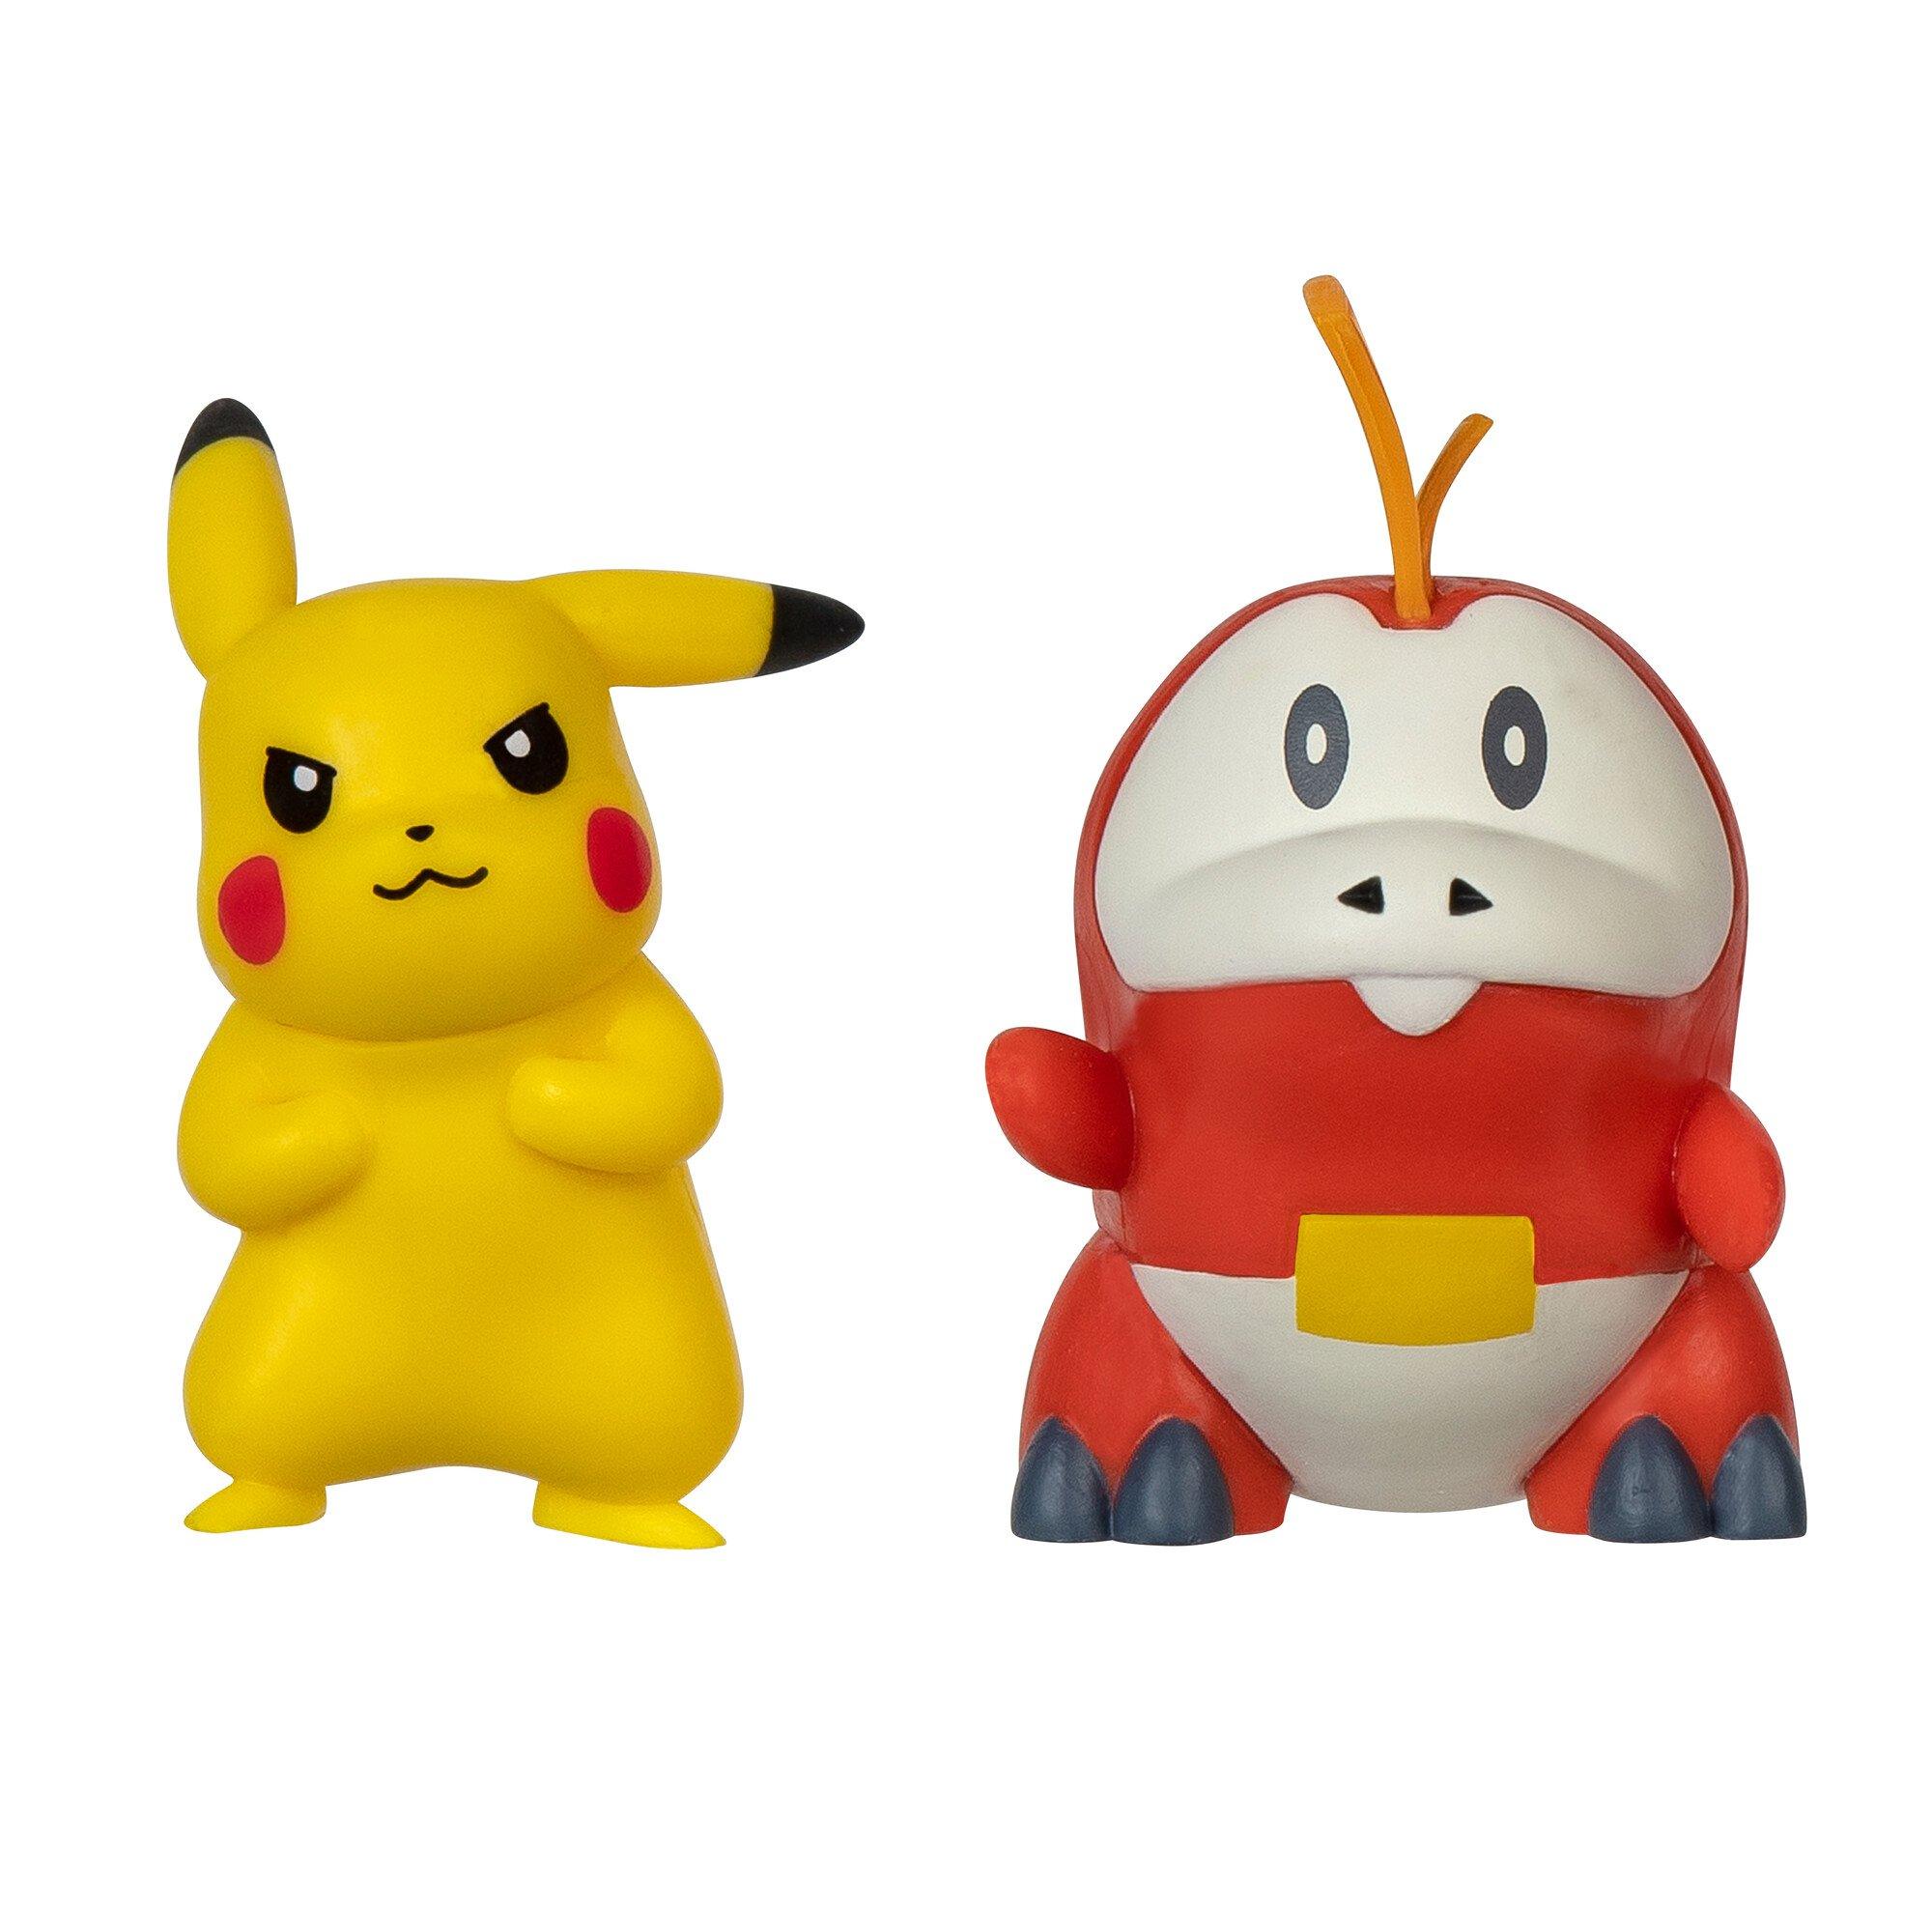 https://media.gamestop.com/i/gamestop/20003856/Jazwares-Pokemon-First-Partner-Fuecoco-and-Pikachu-Battle-Figure-Set-2-Pack?$pdp$